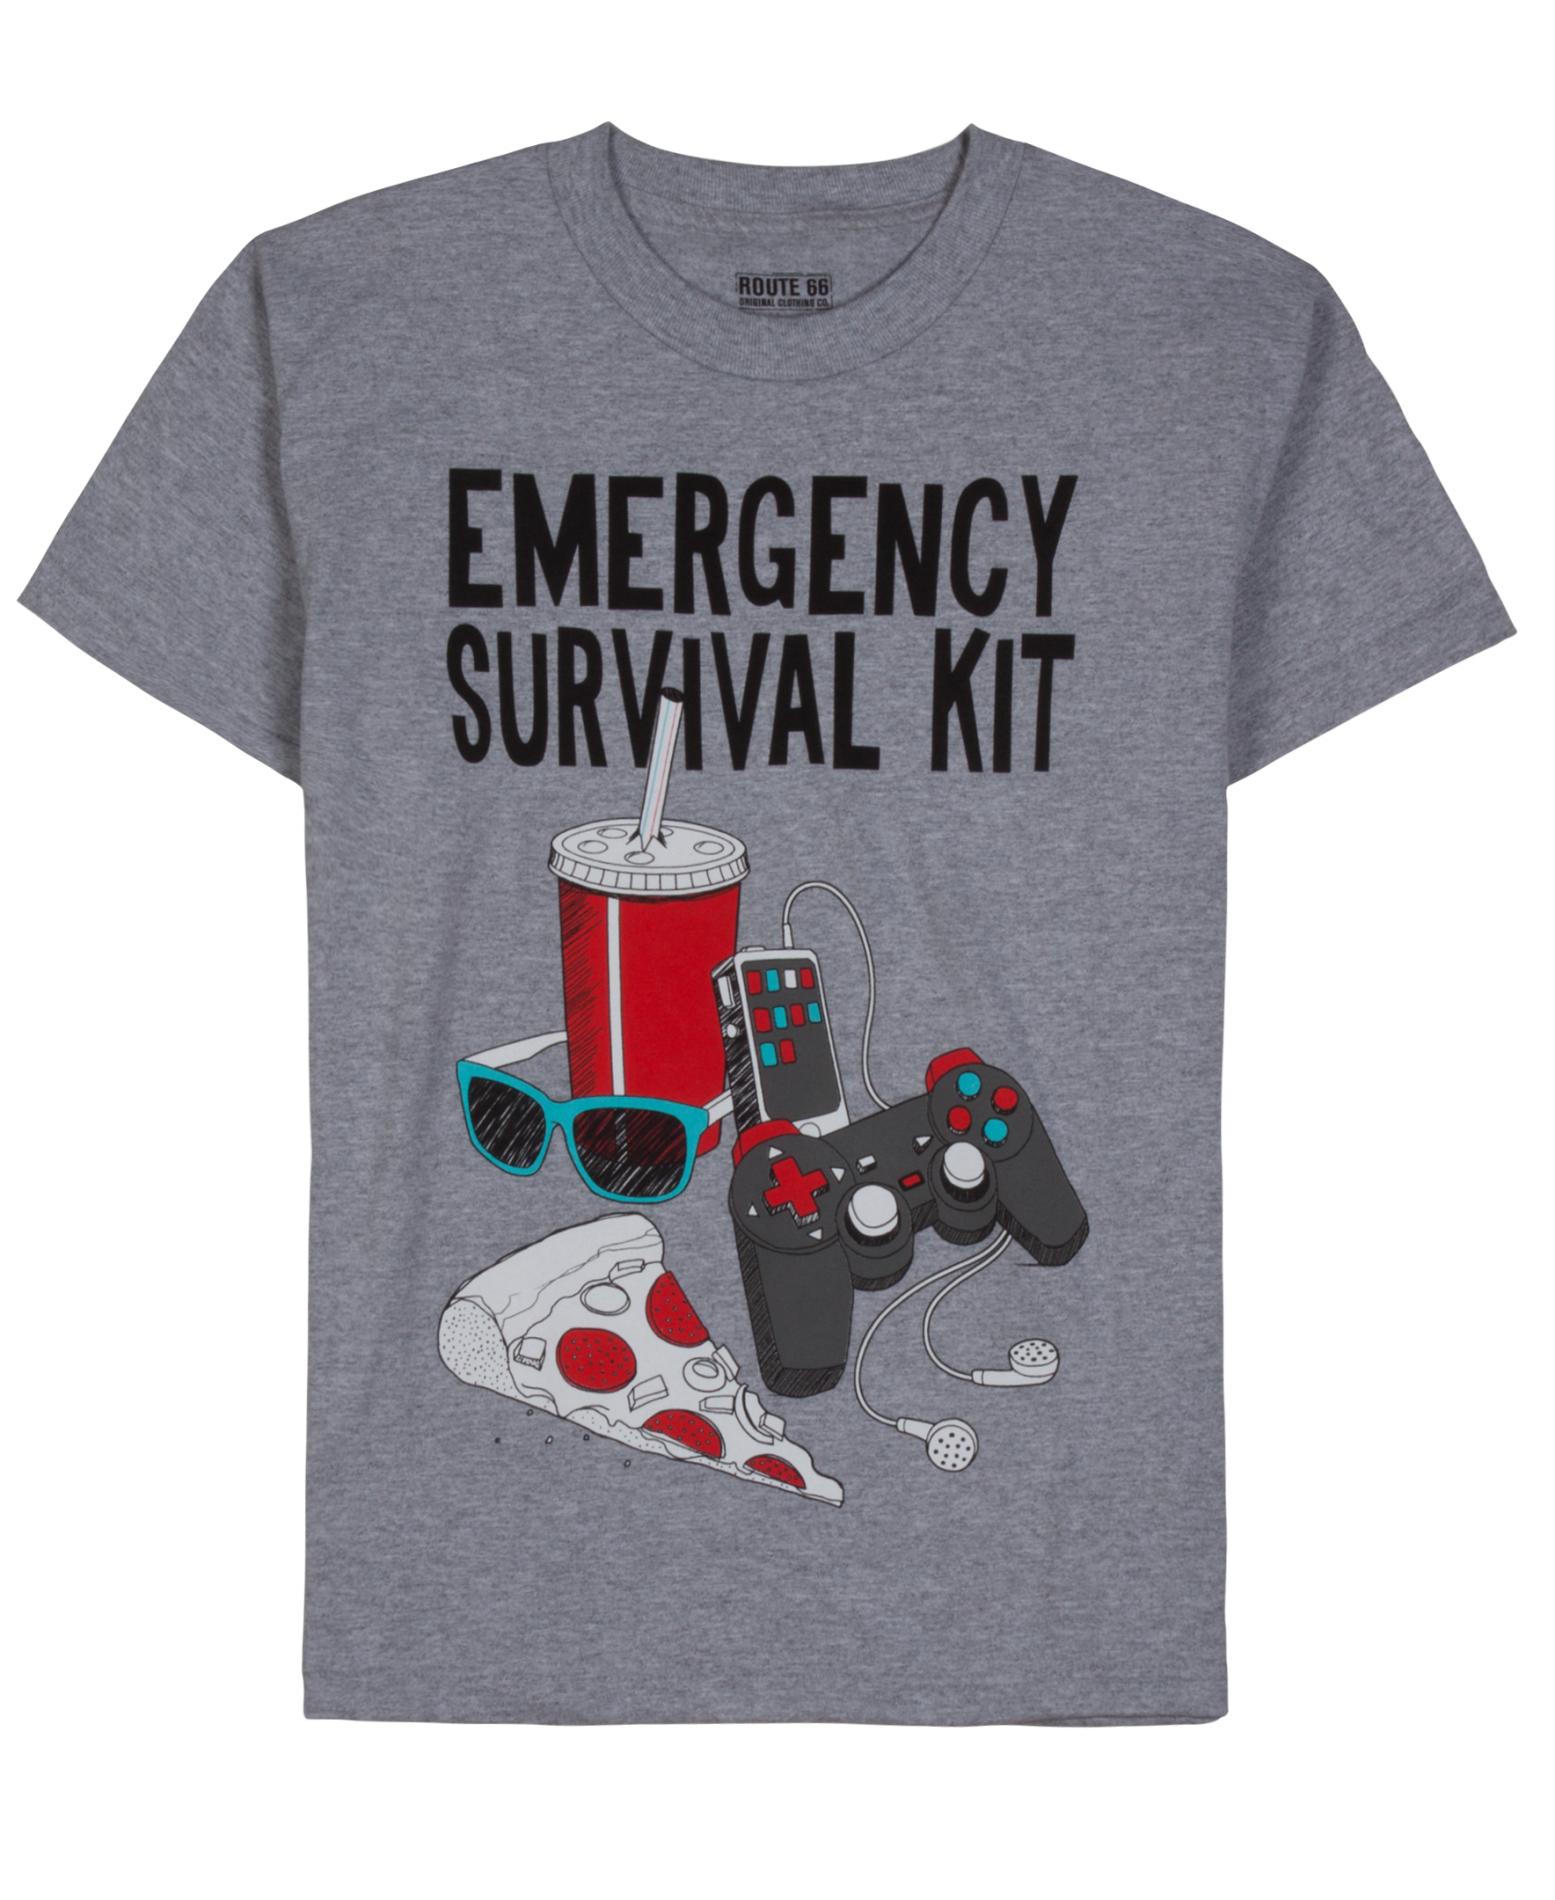 Route 66 Boy's Graphic T-Shirt - Emergency Survival Kit